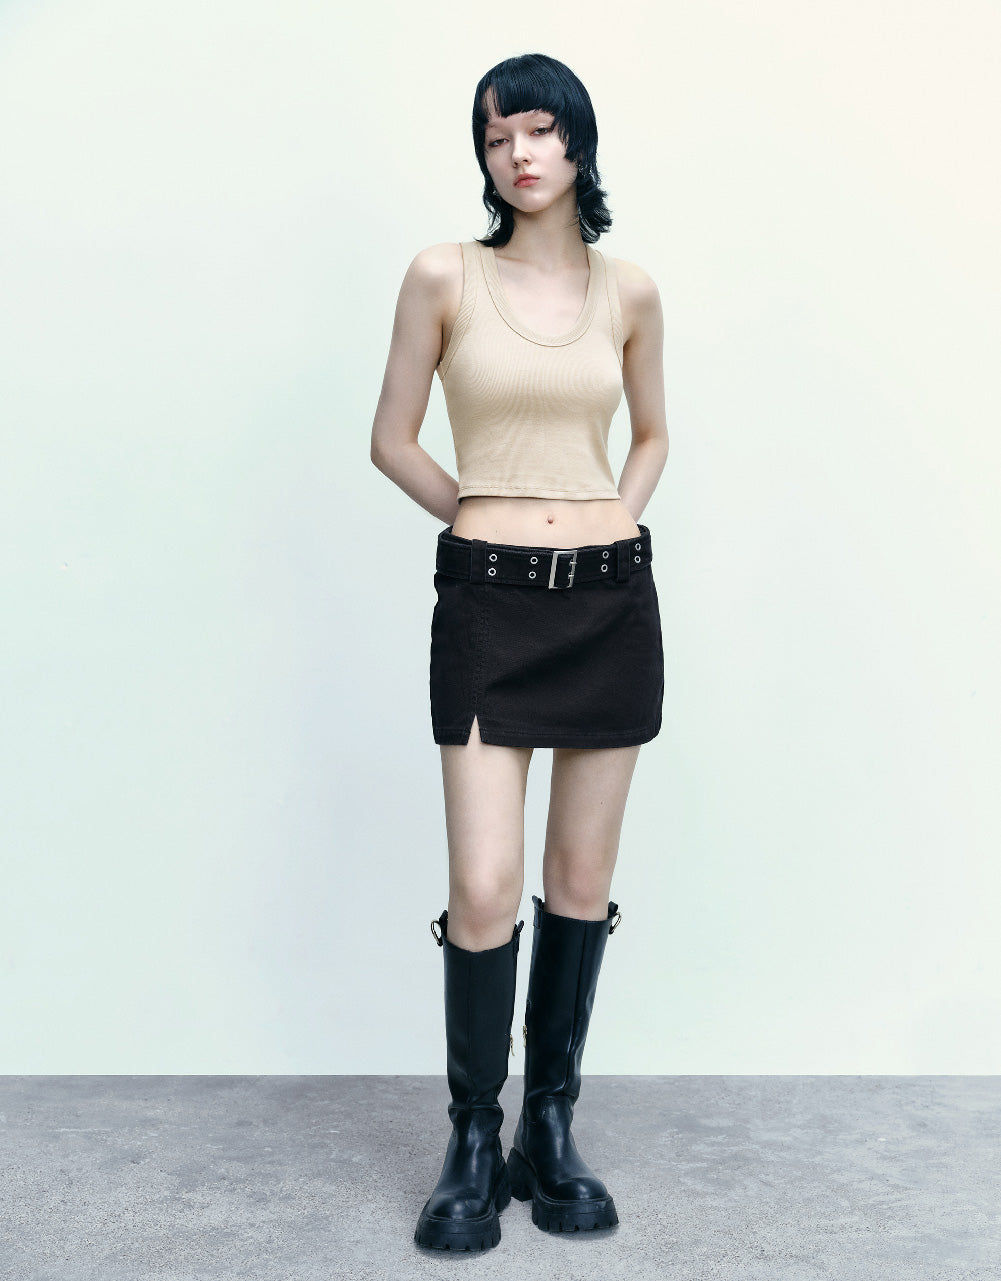 Mini A-Line Skirt With Belt